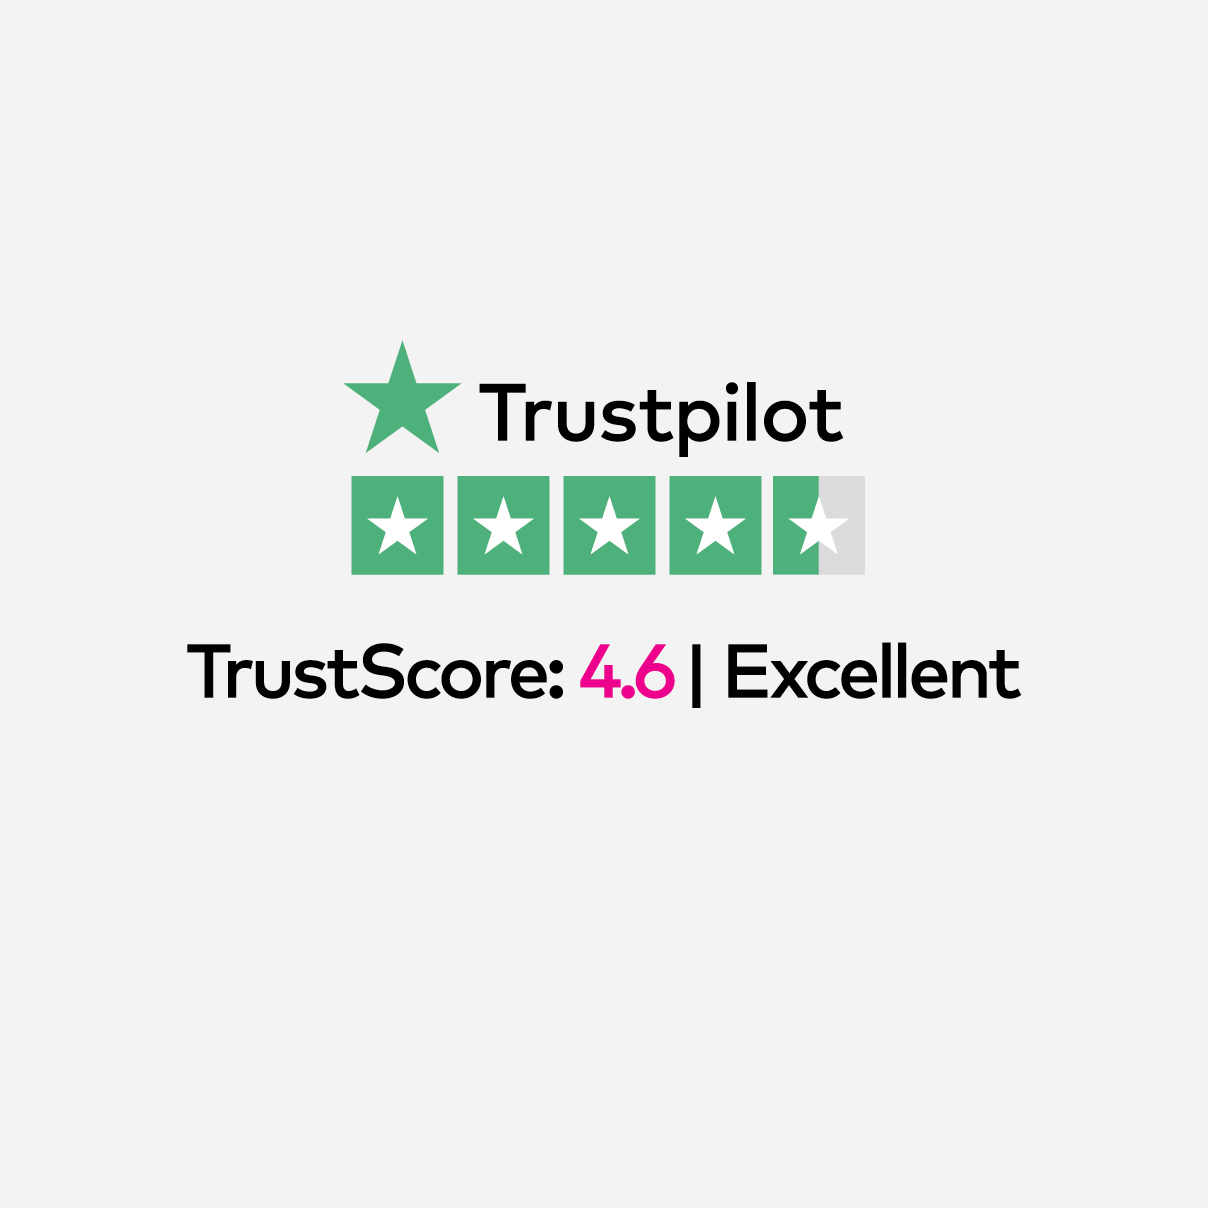 Trustpilot Score 4.6